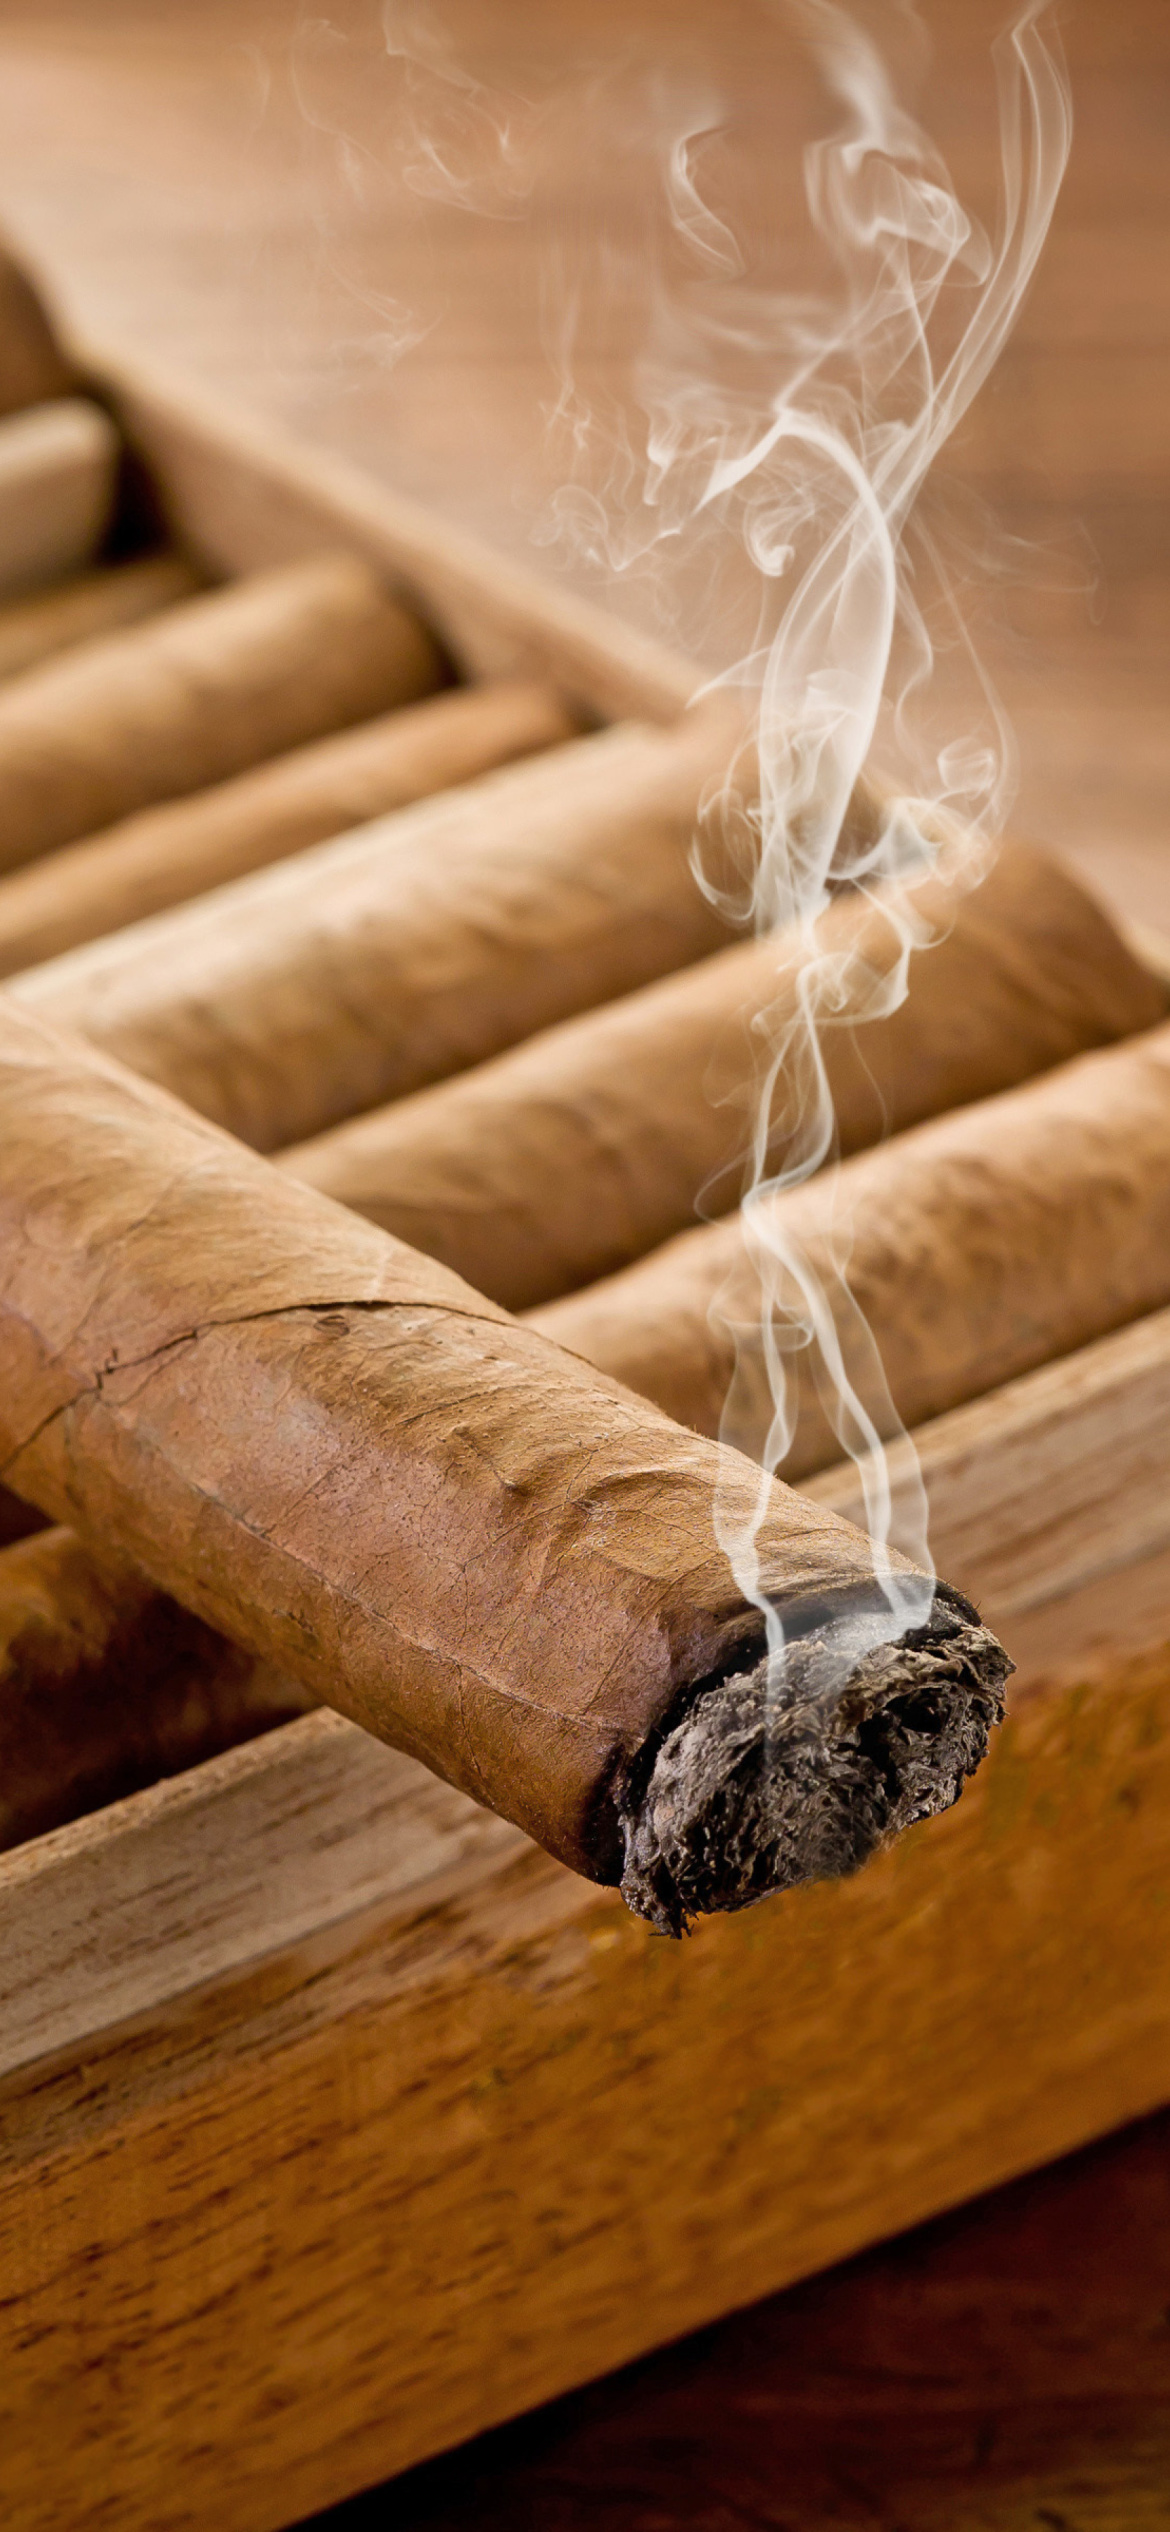 Cuban Cigar Cohiba Wallpaper For iPhone